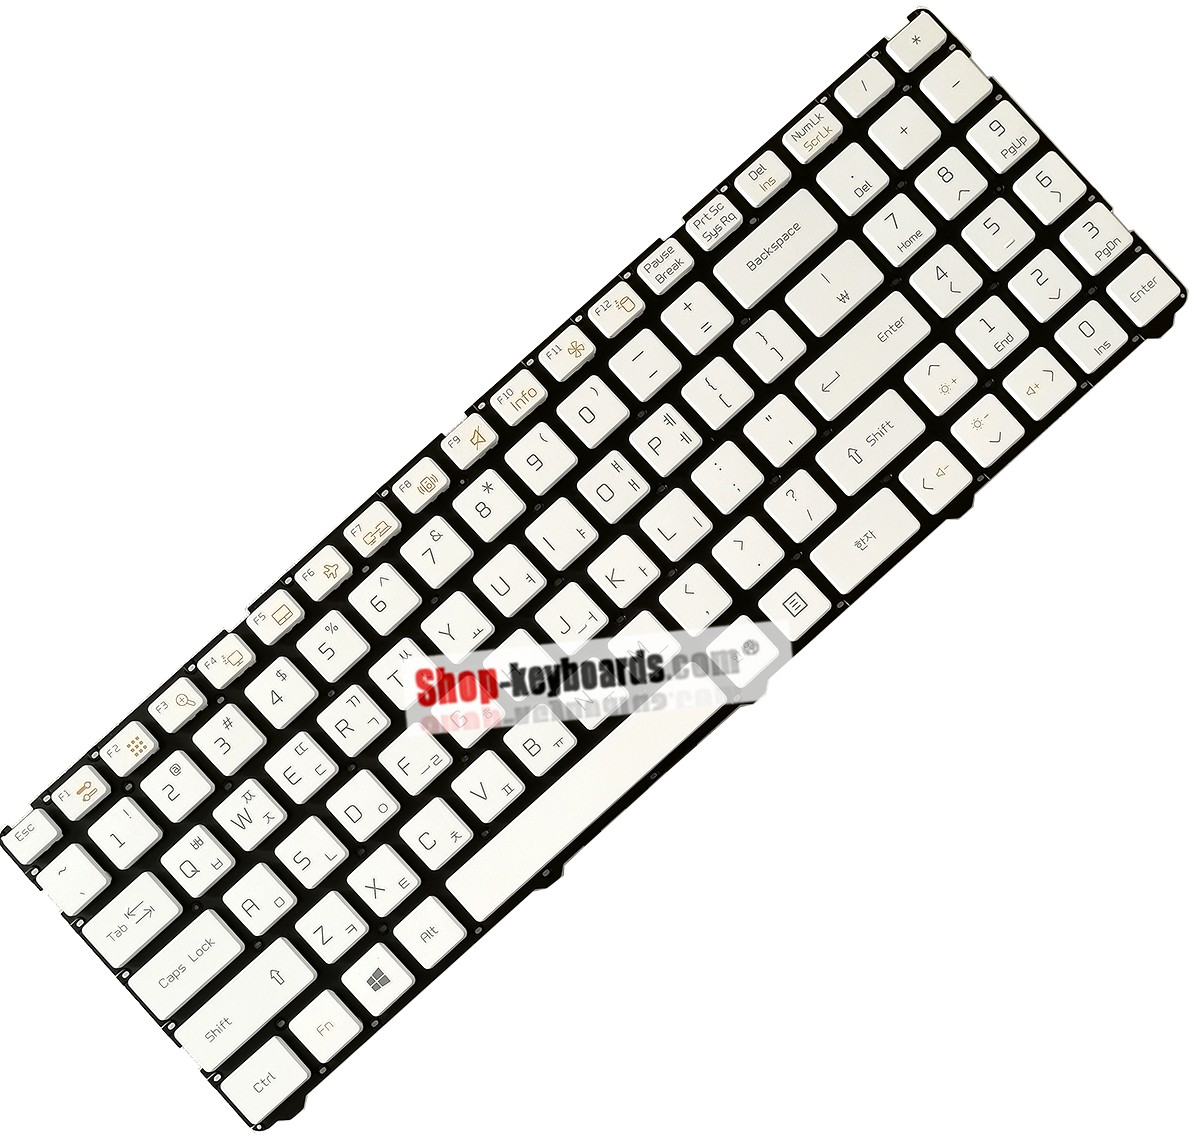 LG MP-12K73LA-9208 Keyboard replacement